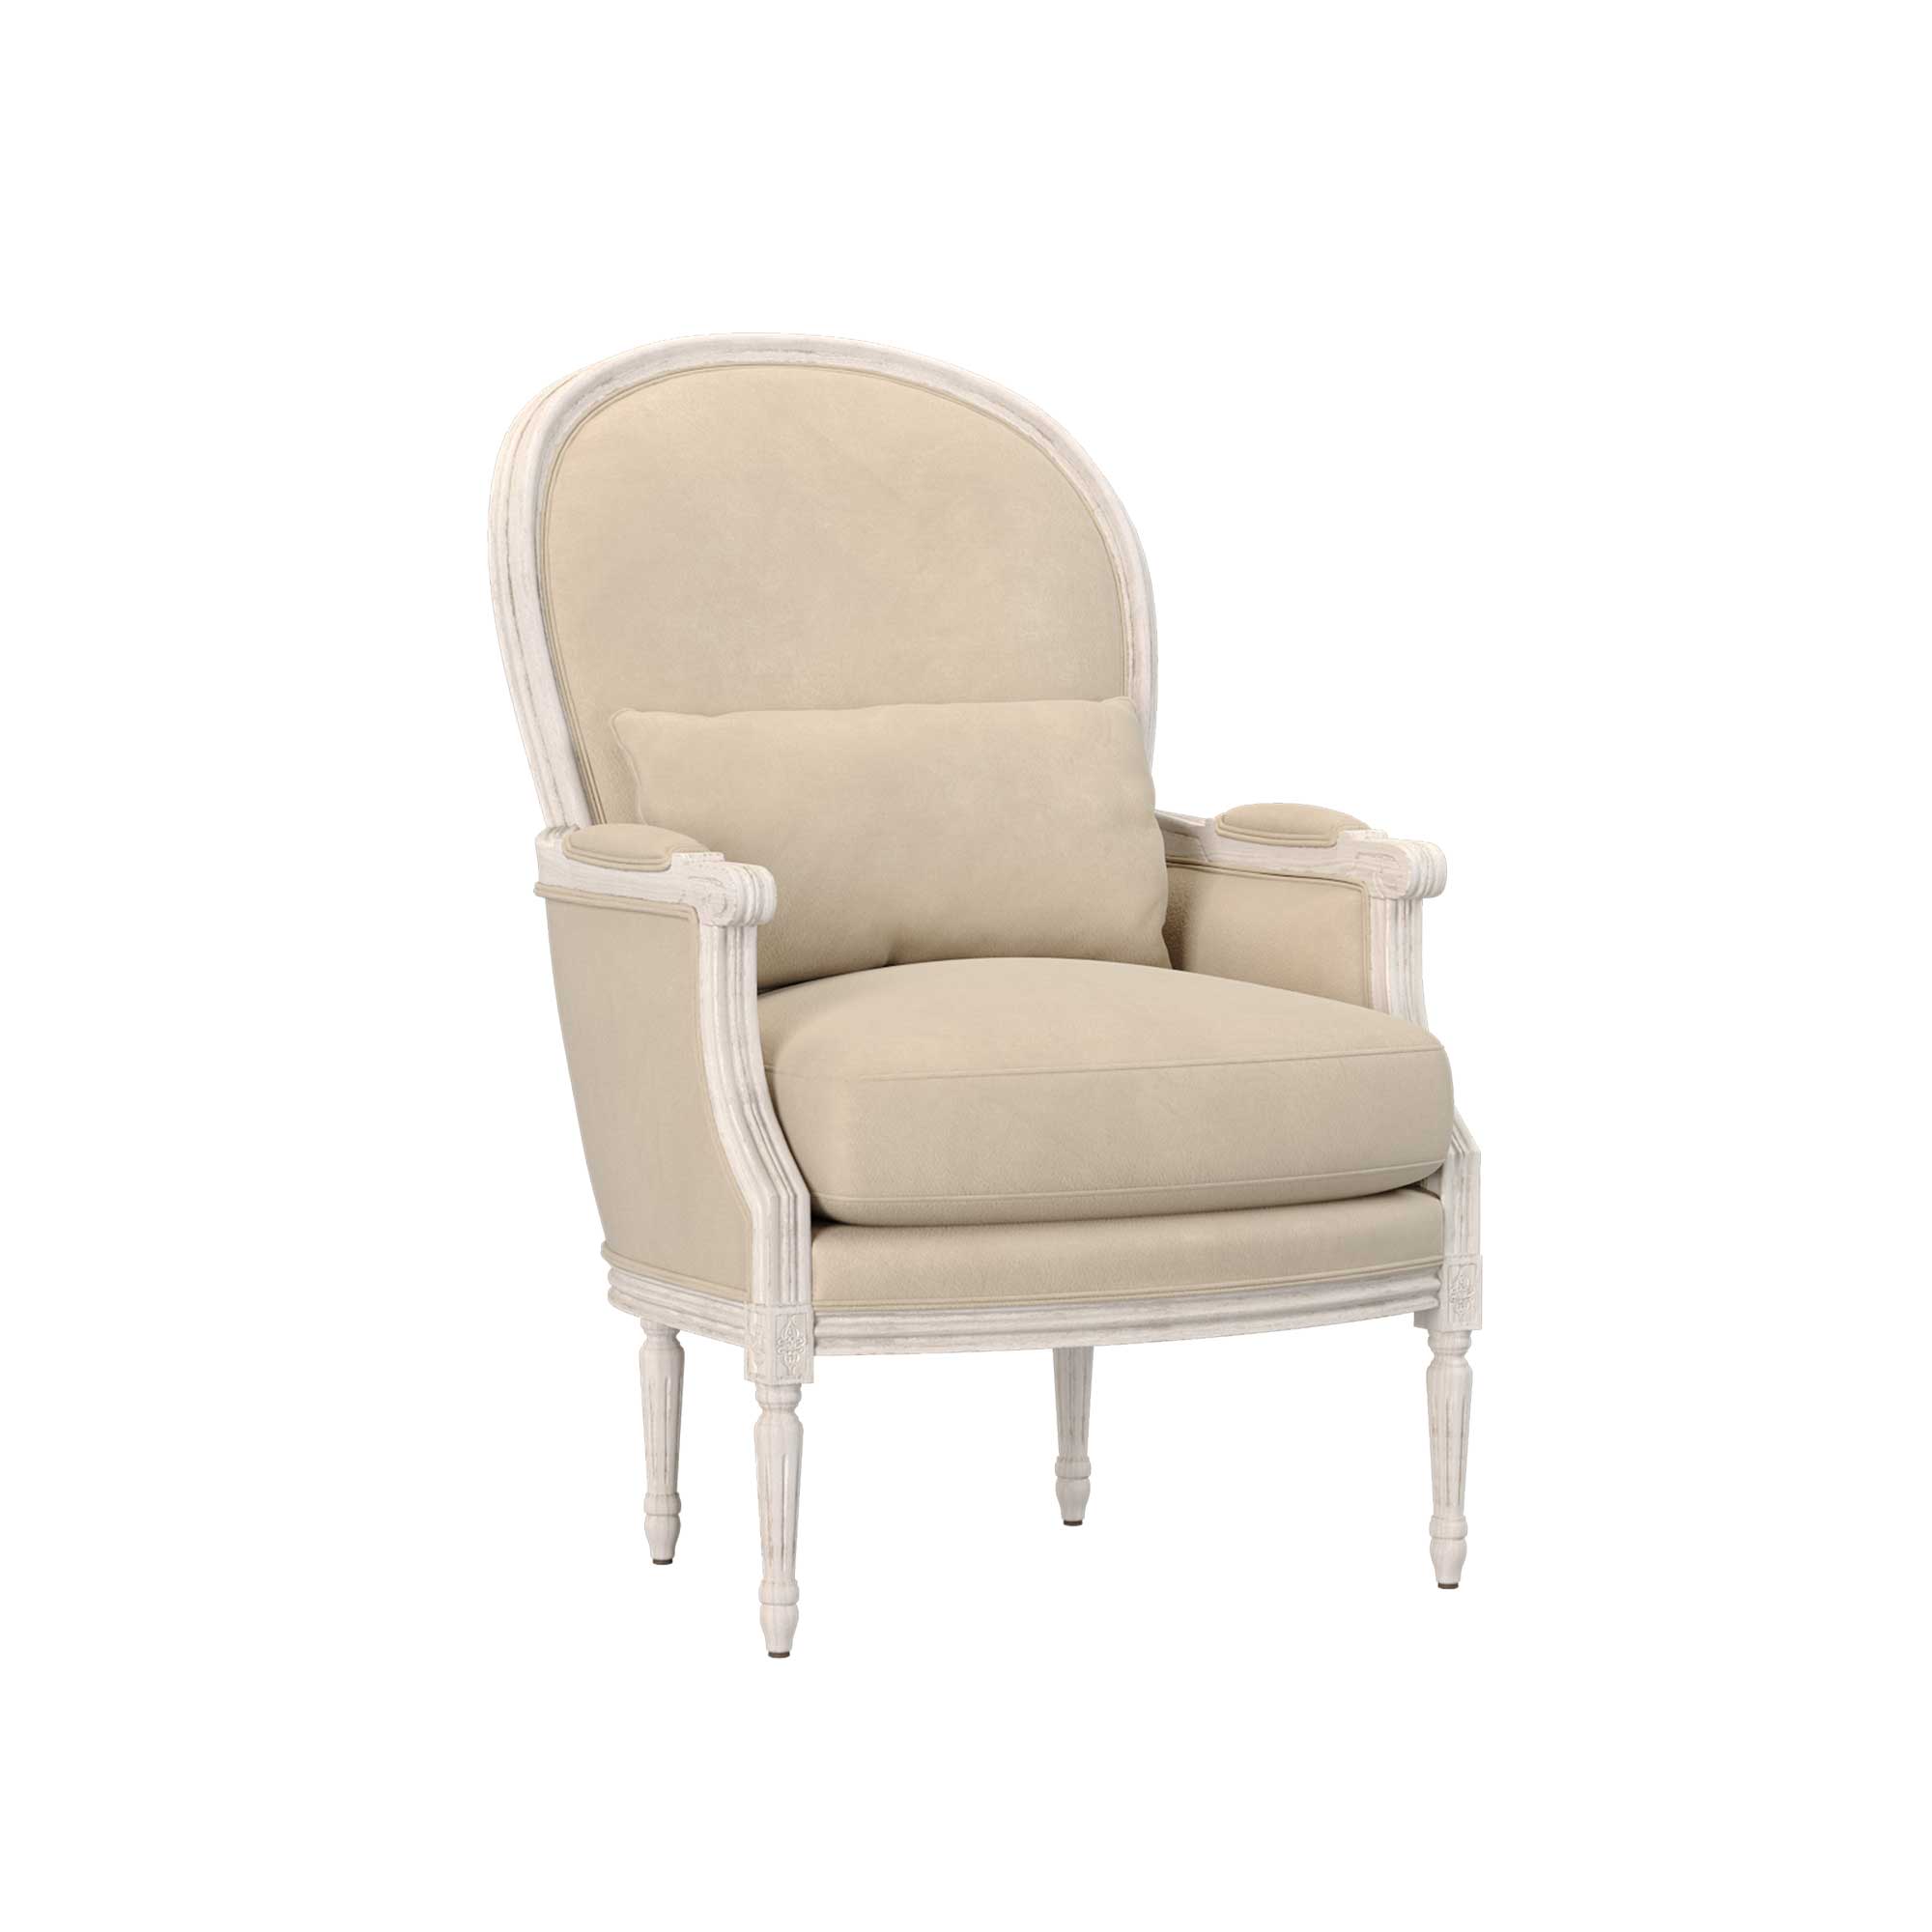 Adele Classic Lounge Chair in Vanilla